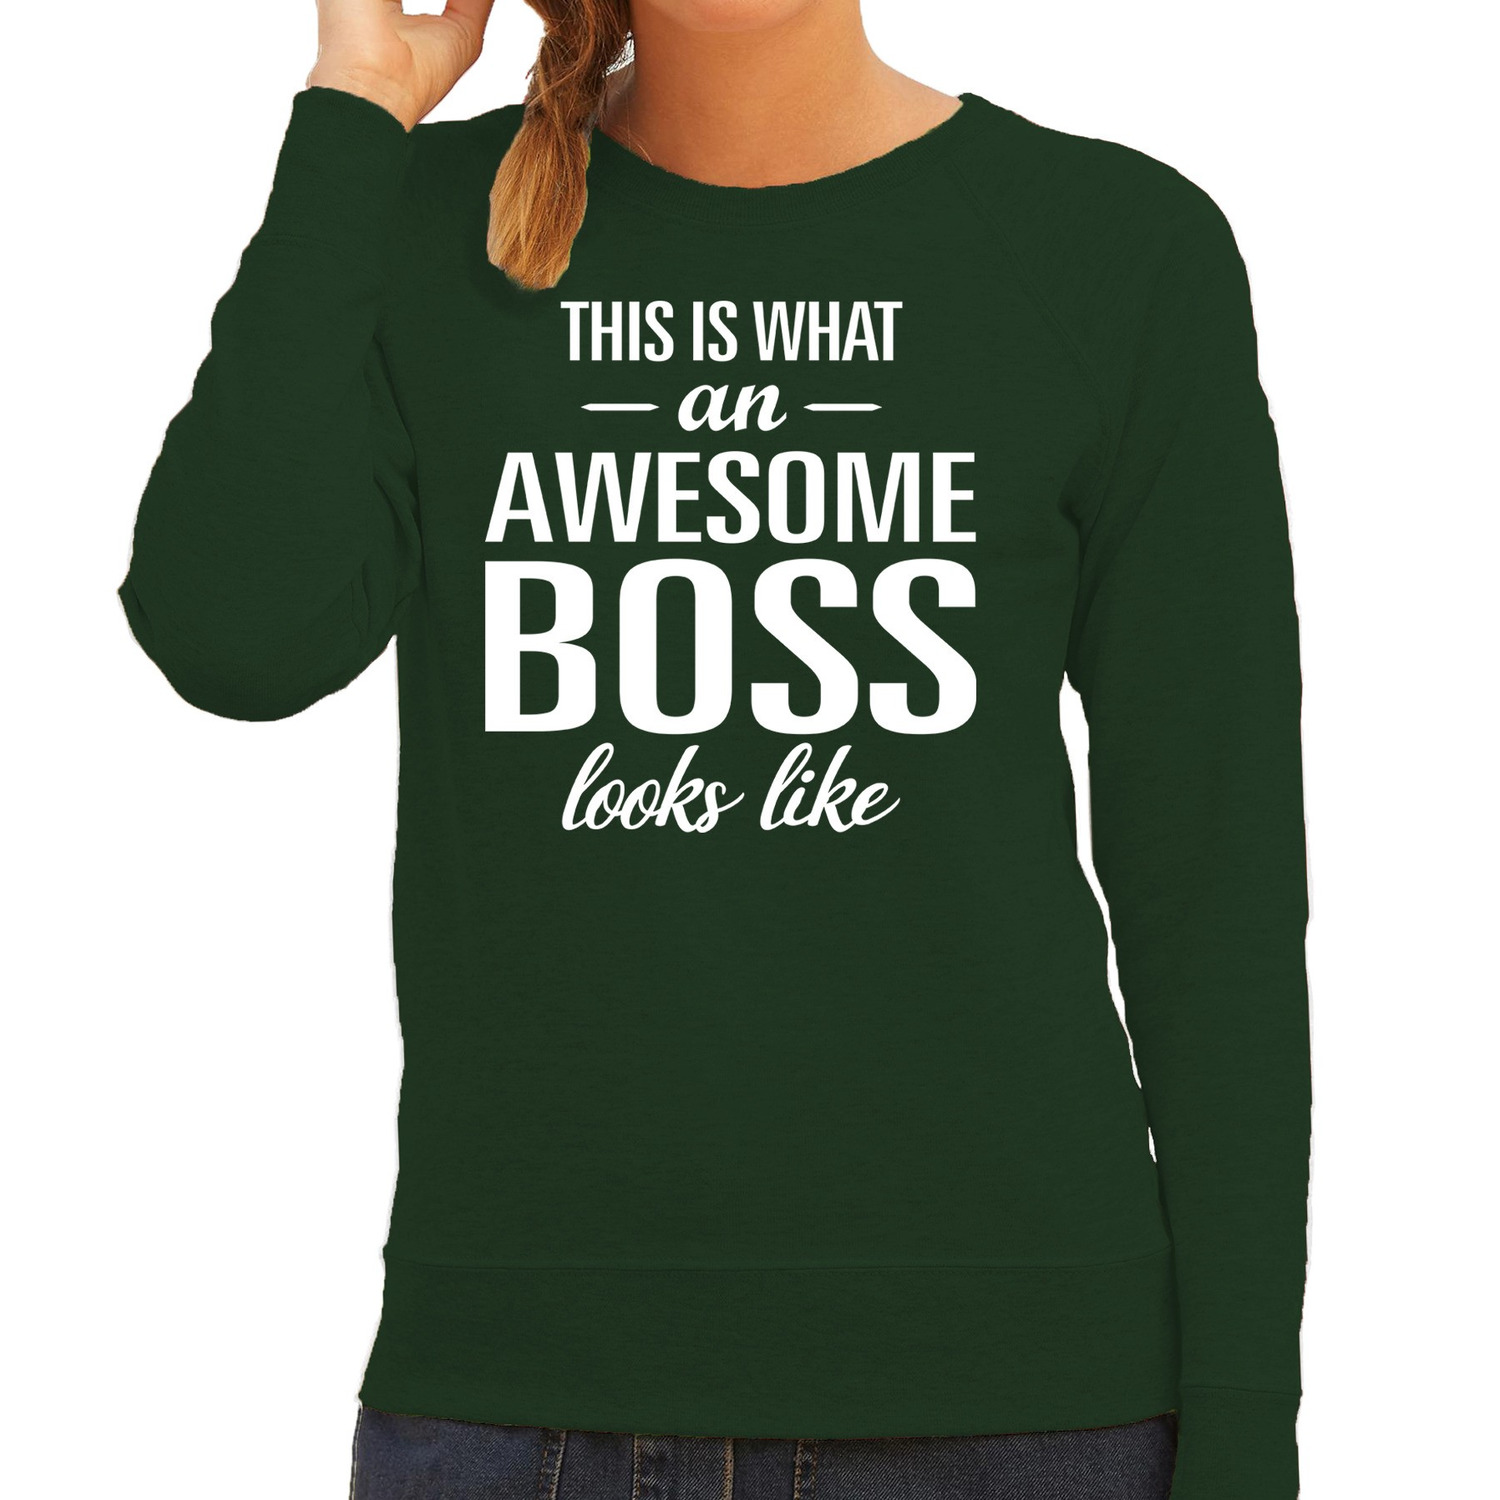 Awesome boss / baas cadeau sweater / trui groen dames